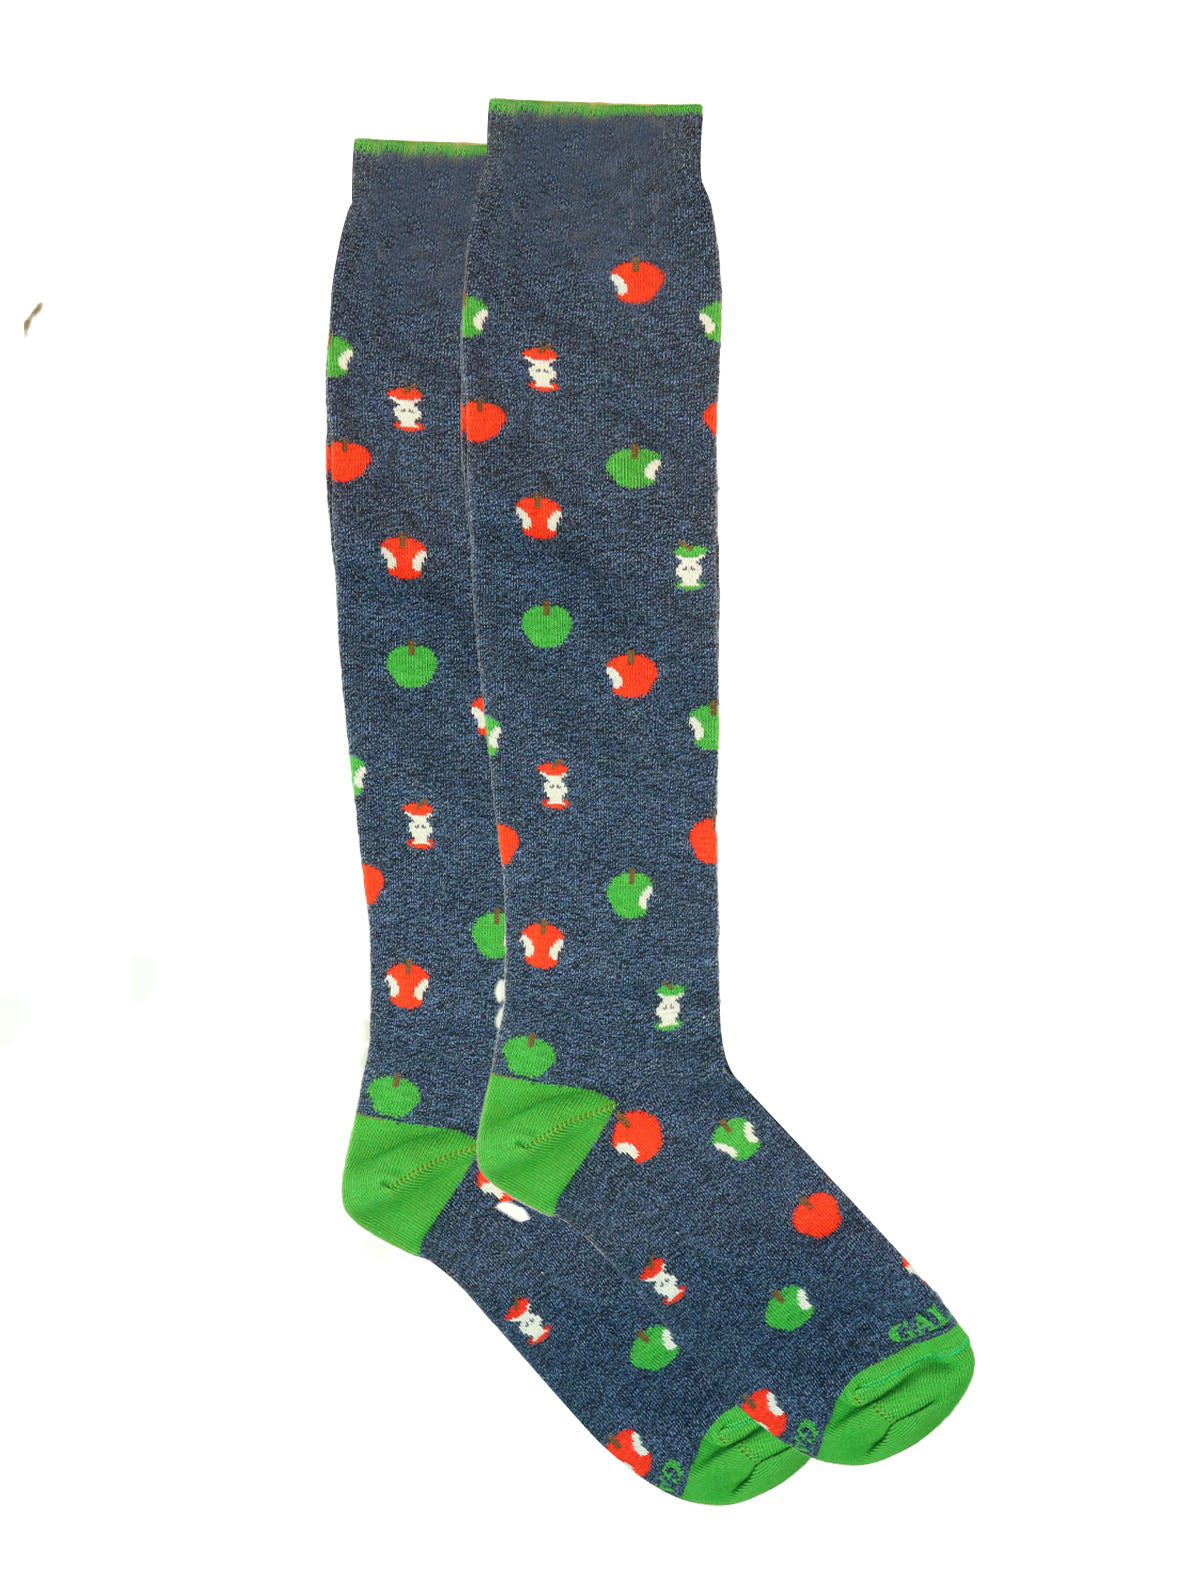 Gallo Long Socks in Blue w/ Apples Print